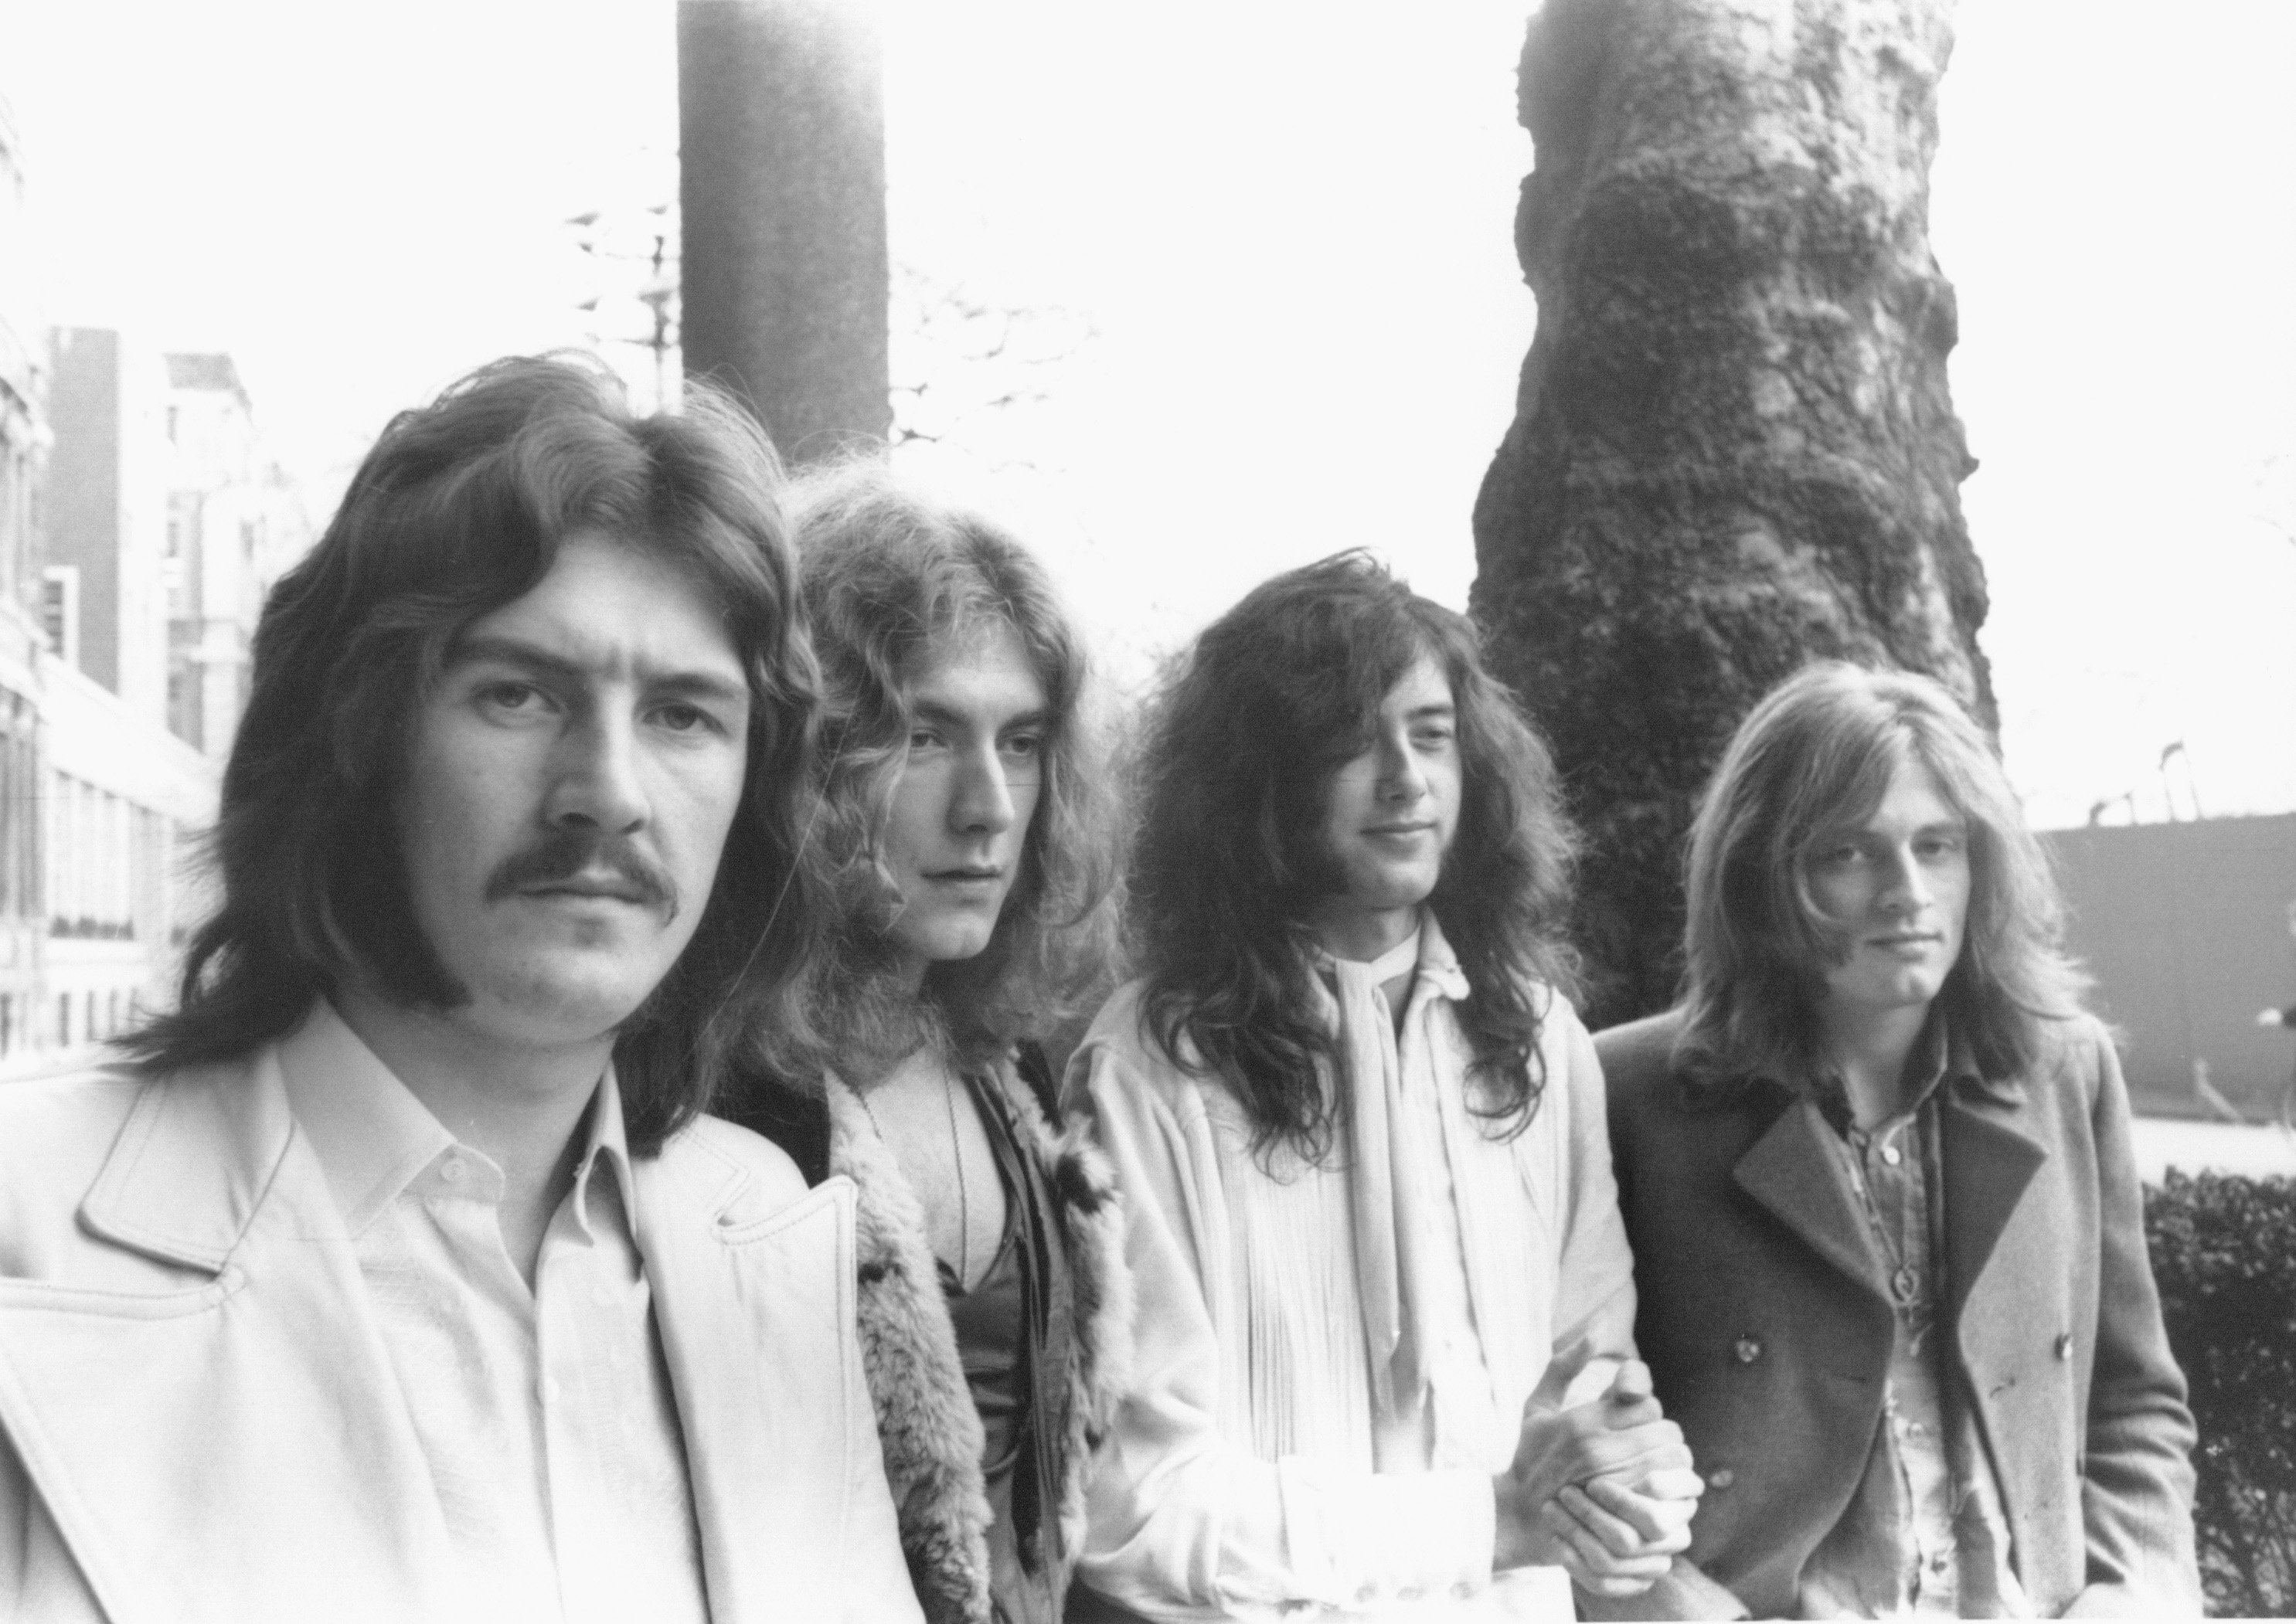 A black-and-white photo of John Bonham, Robert Plant, Jimmy Page and John Paul Jones of Led Zeppelin